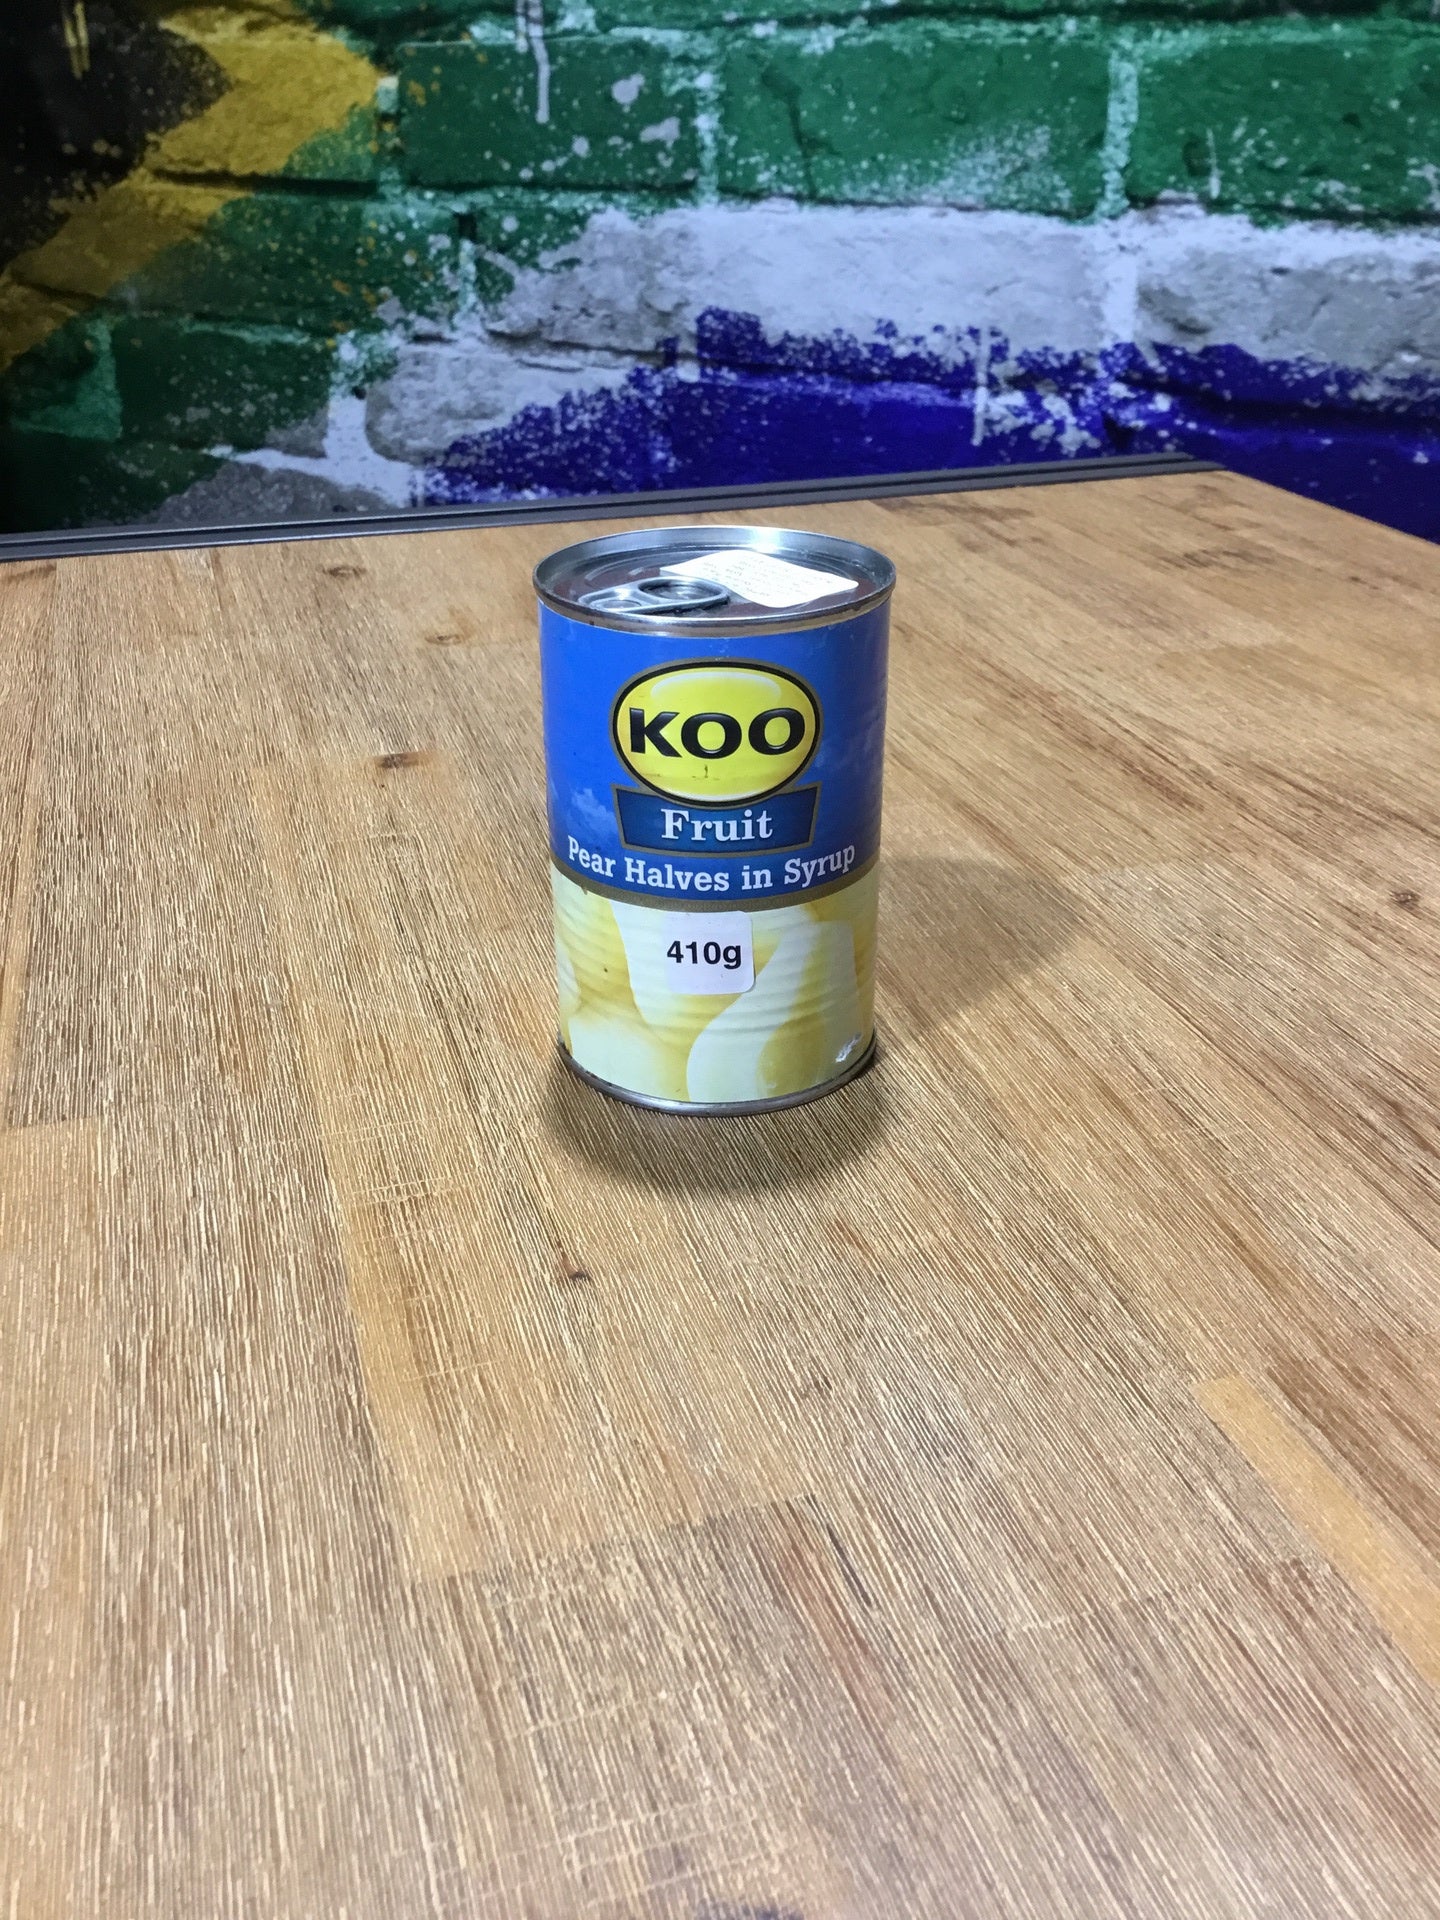 Koo Pear Halves in syrup 410g